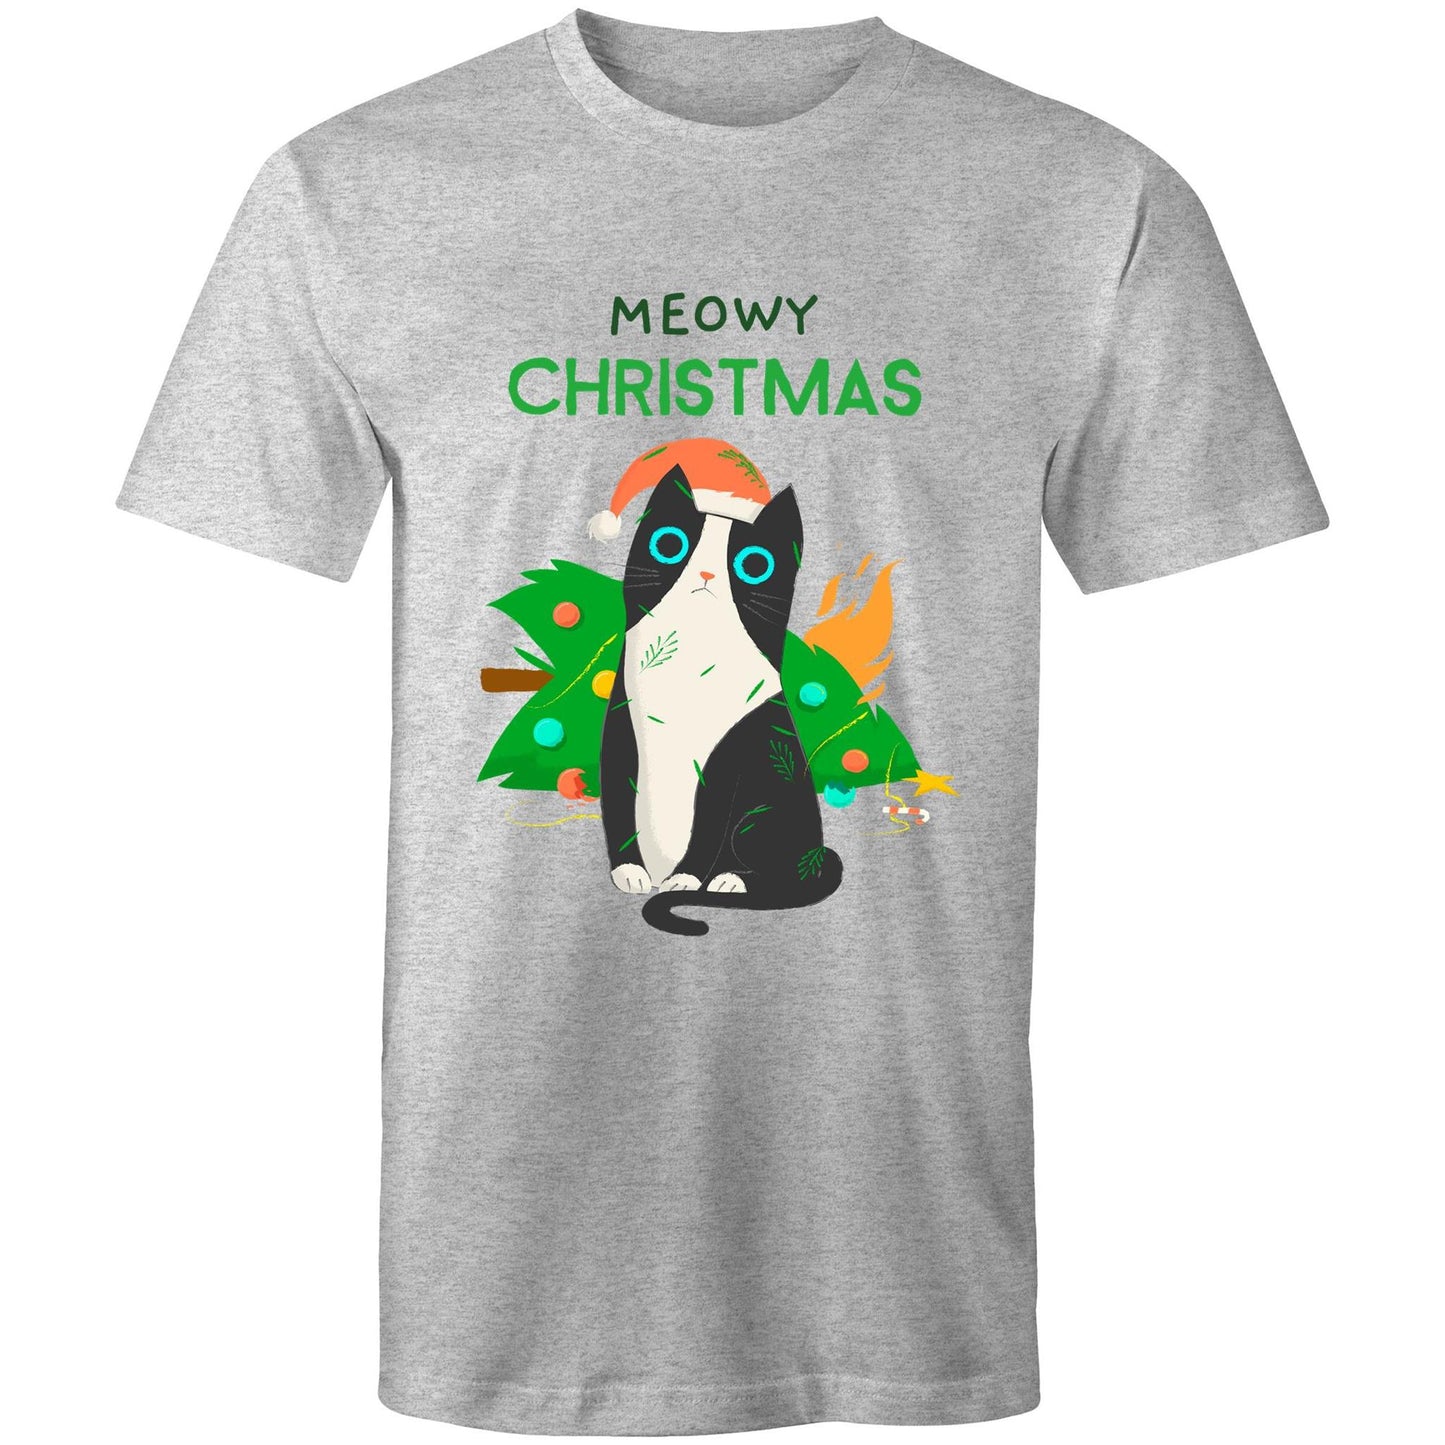 Meowy Christmas - Mens T-Shirt Grey Marle Christmas Mens T-shirt Merry Christmas